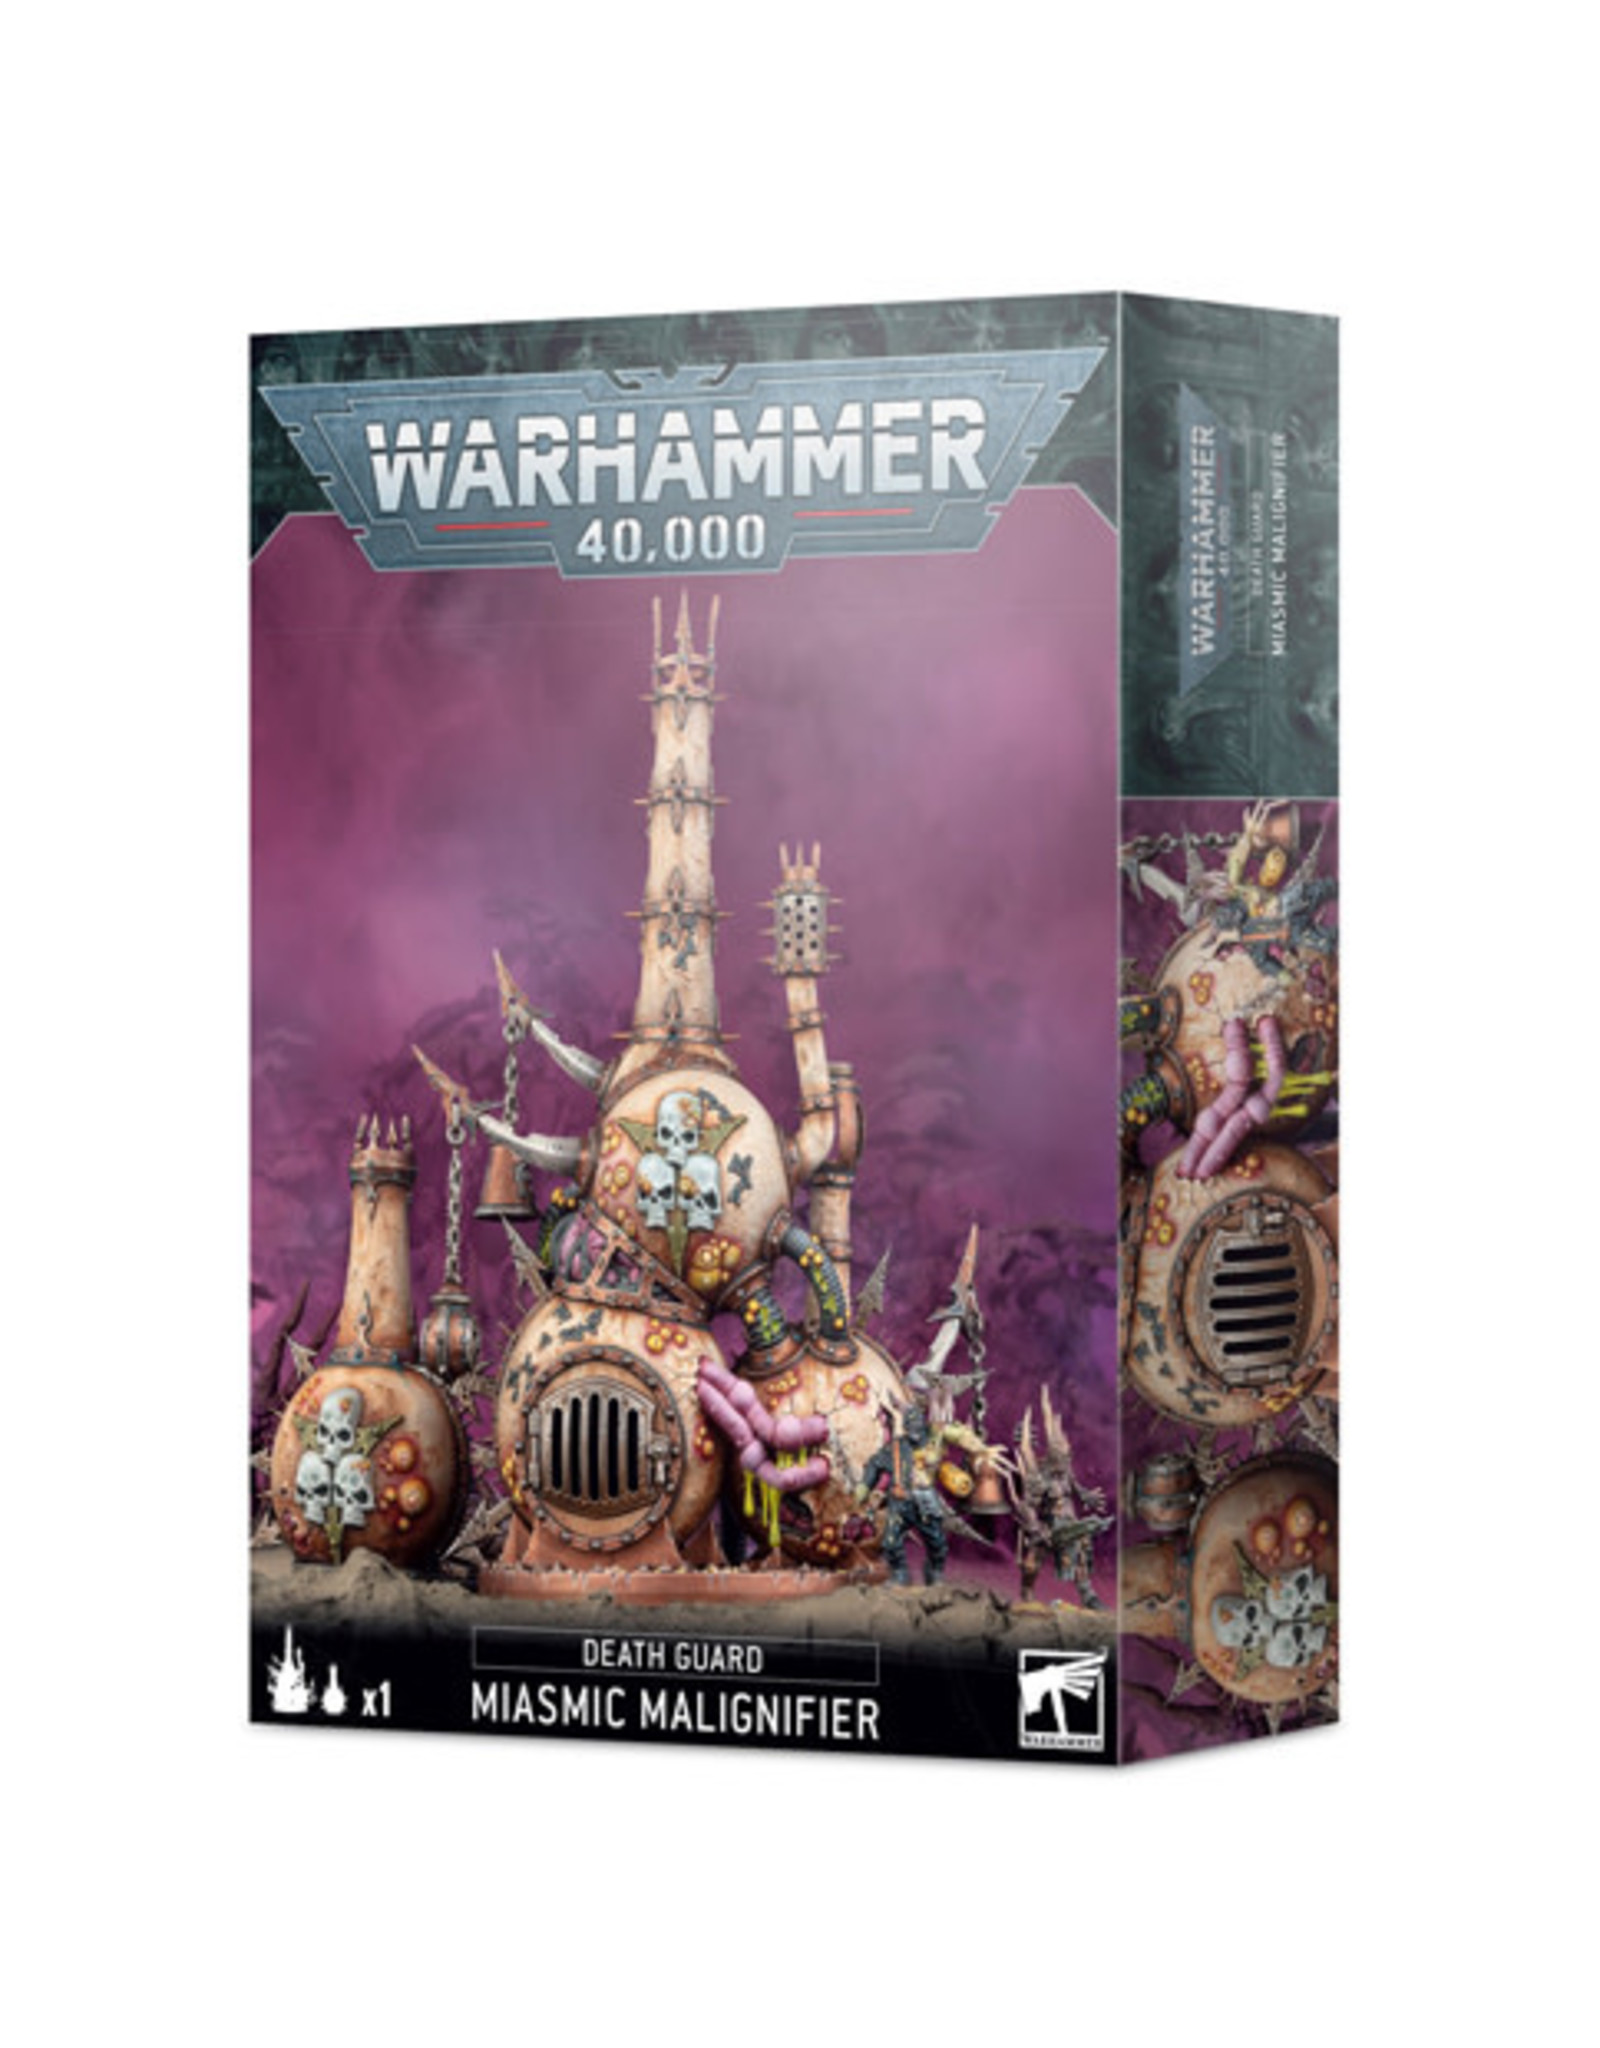 Warhammer 40k Death Guard Miasmic Malignifier